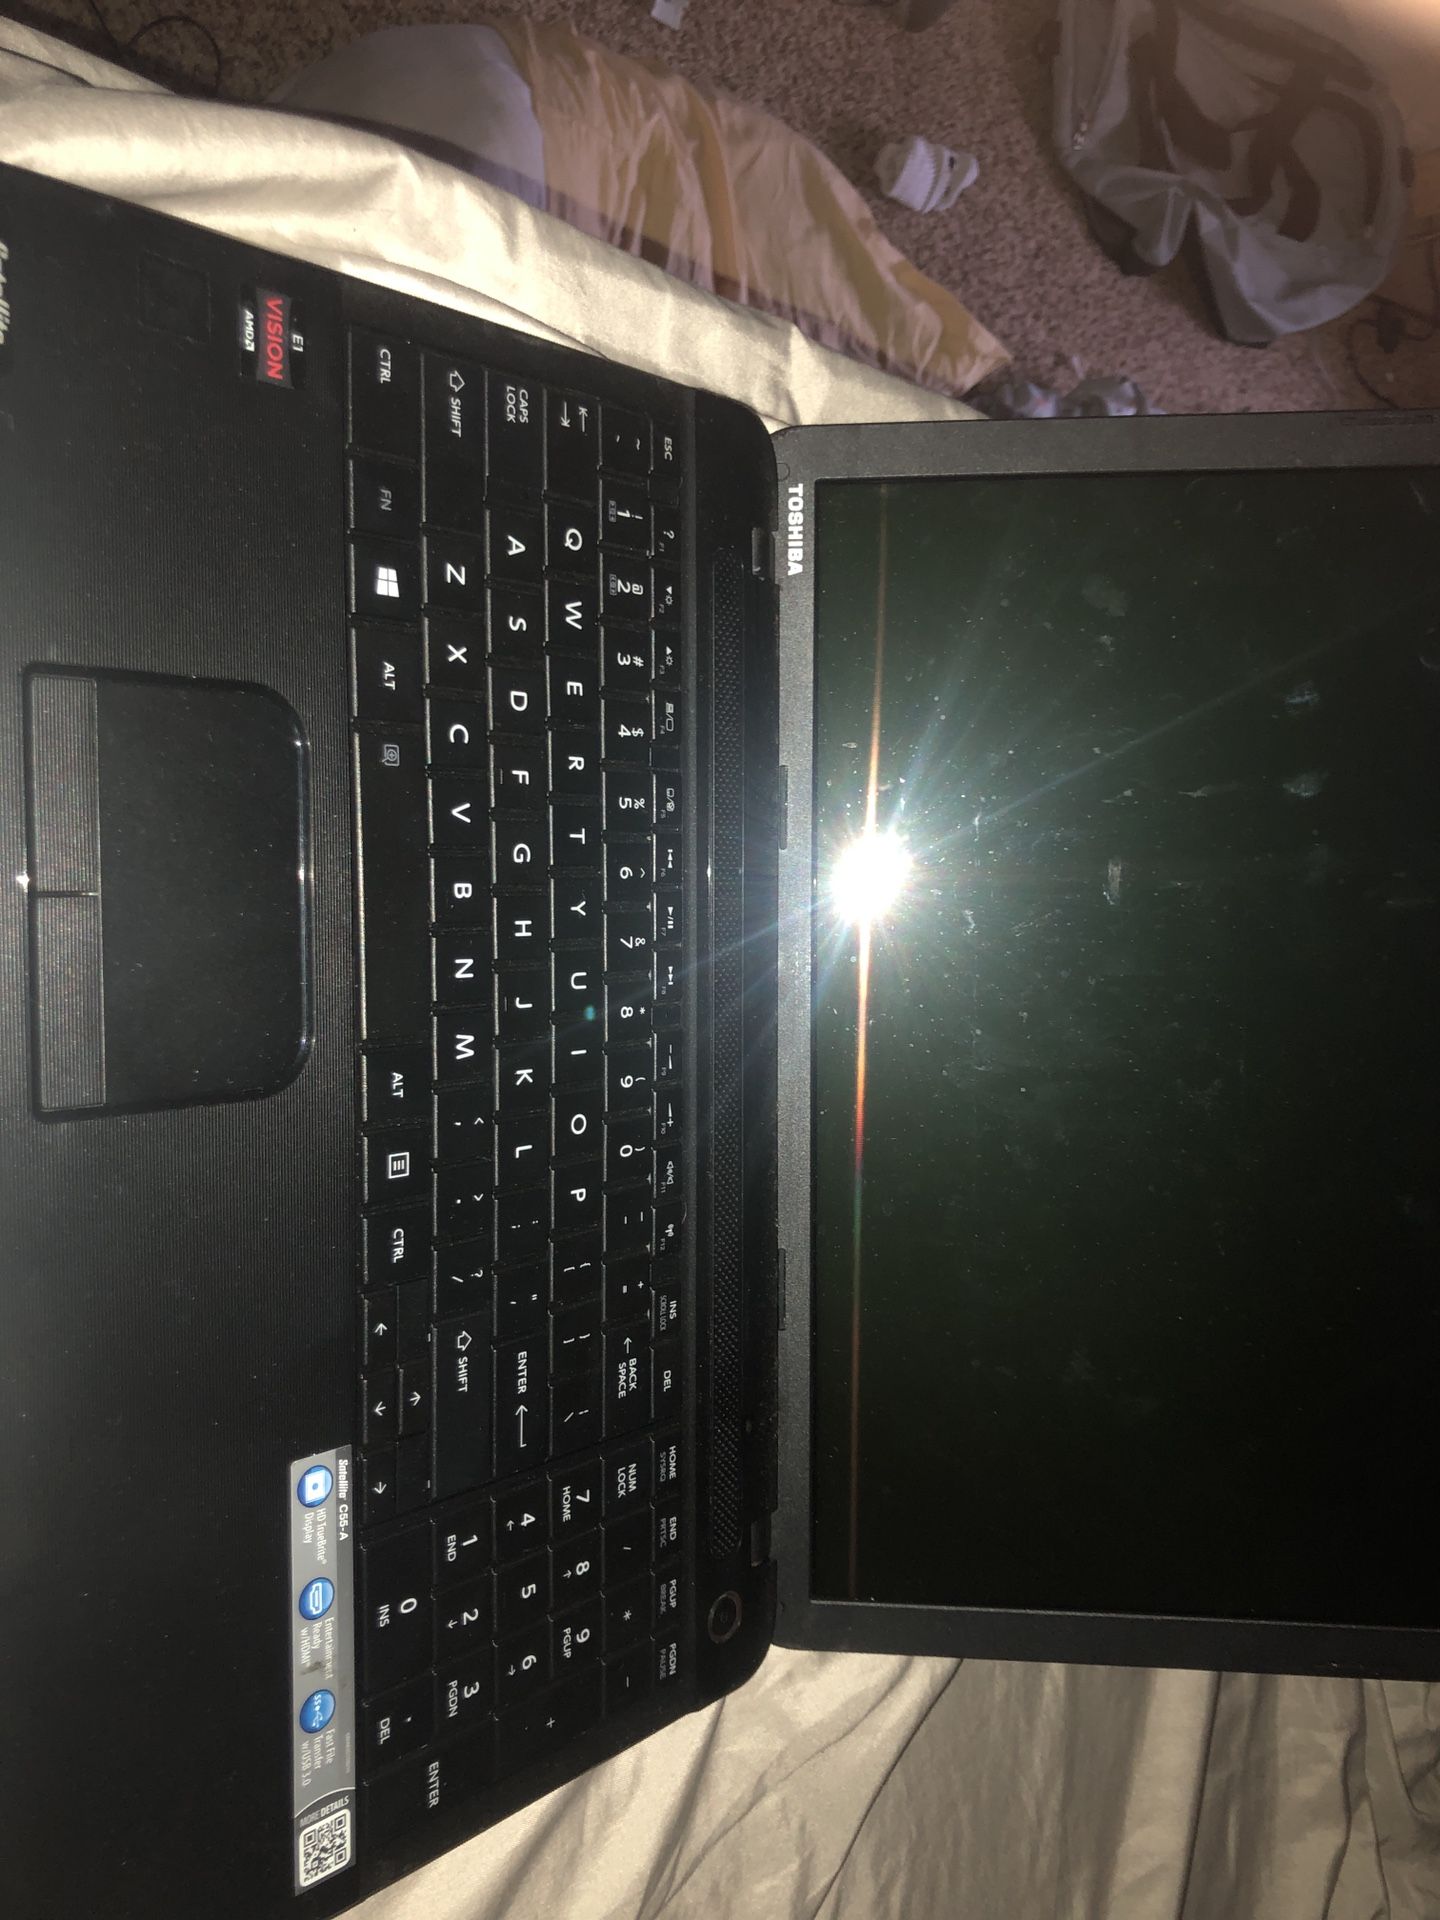 Older toshiba laptop